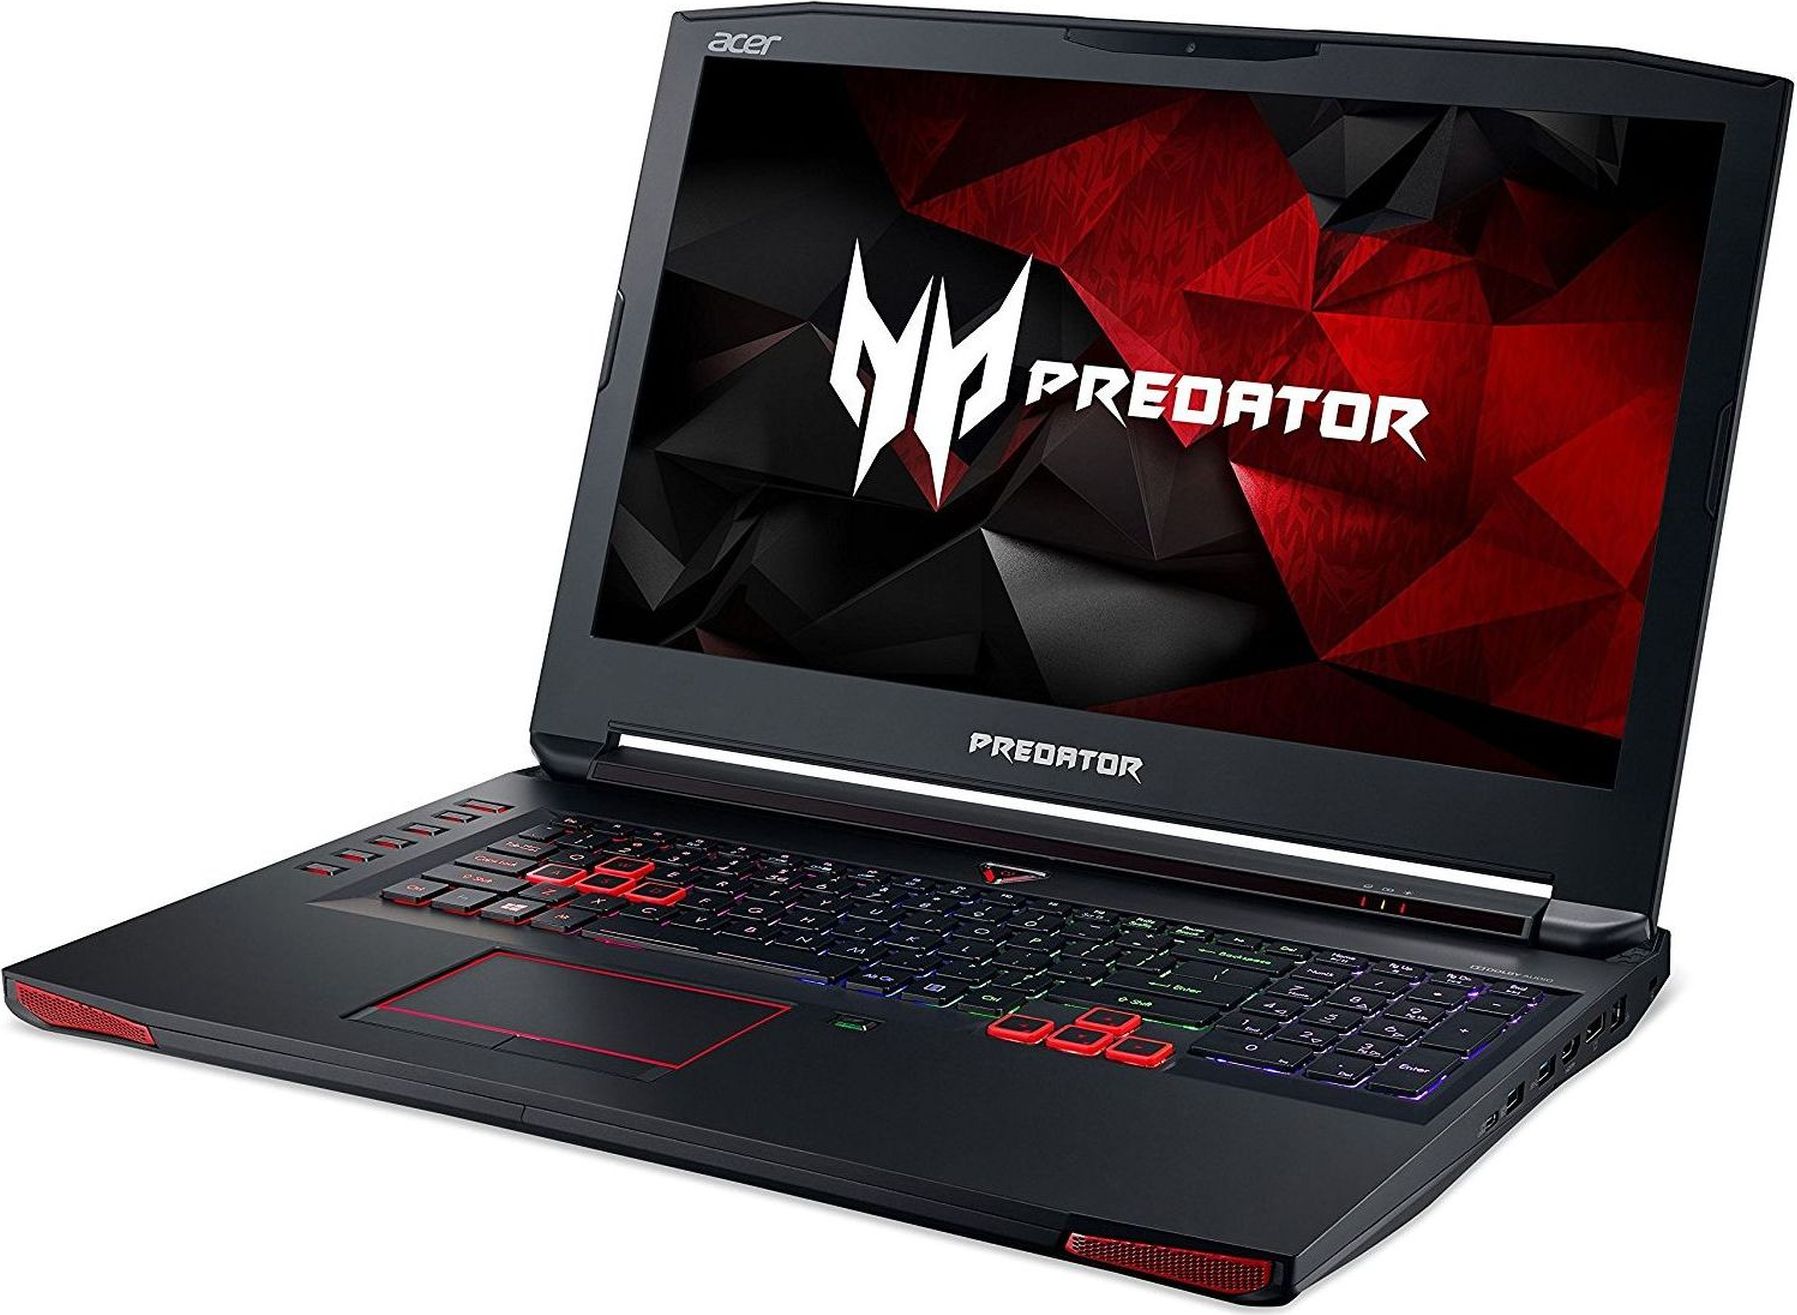 asus predator laptop price